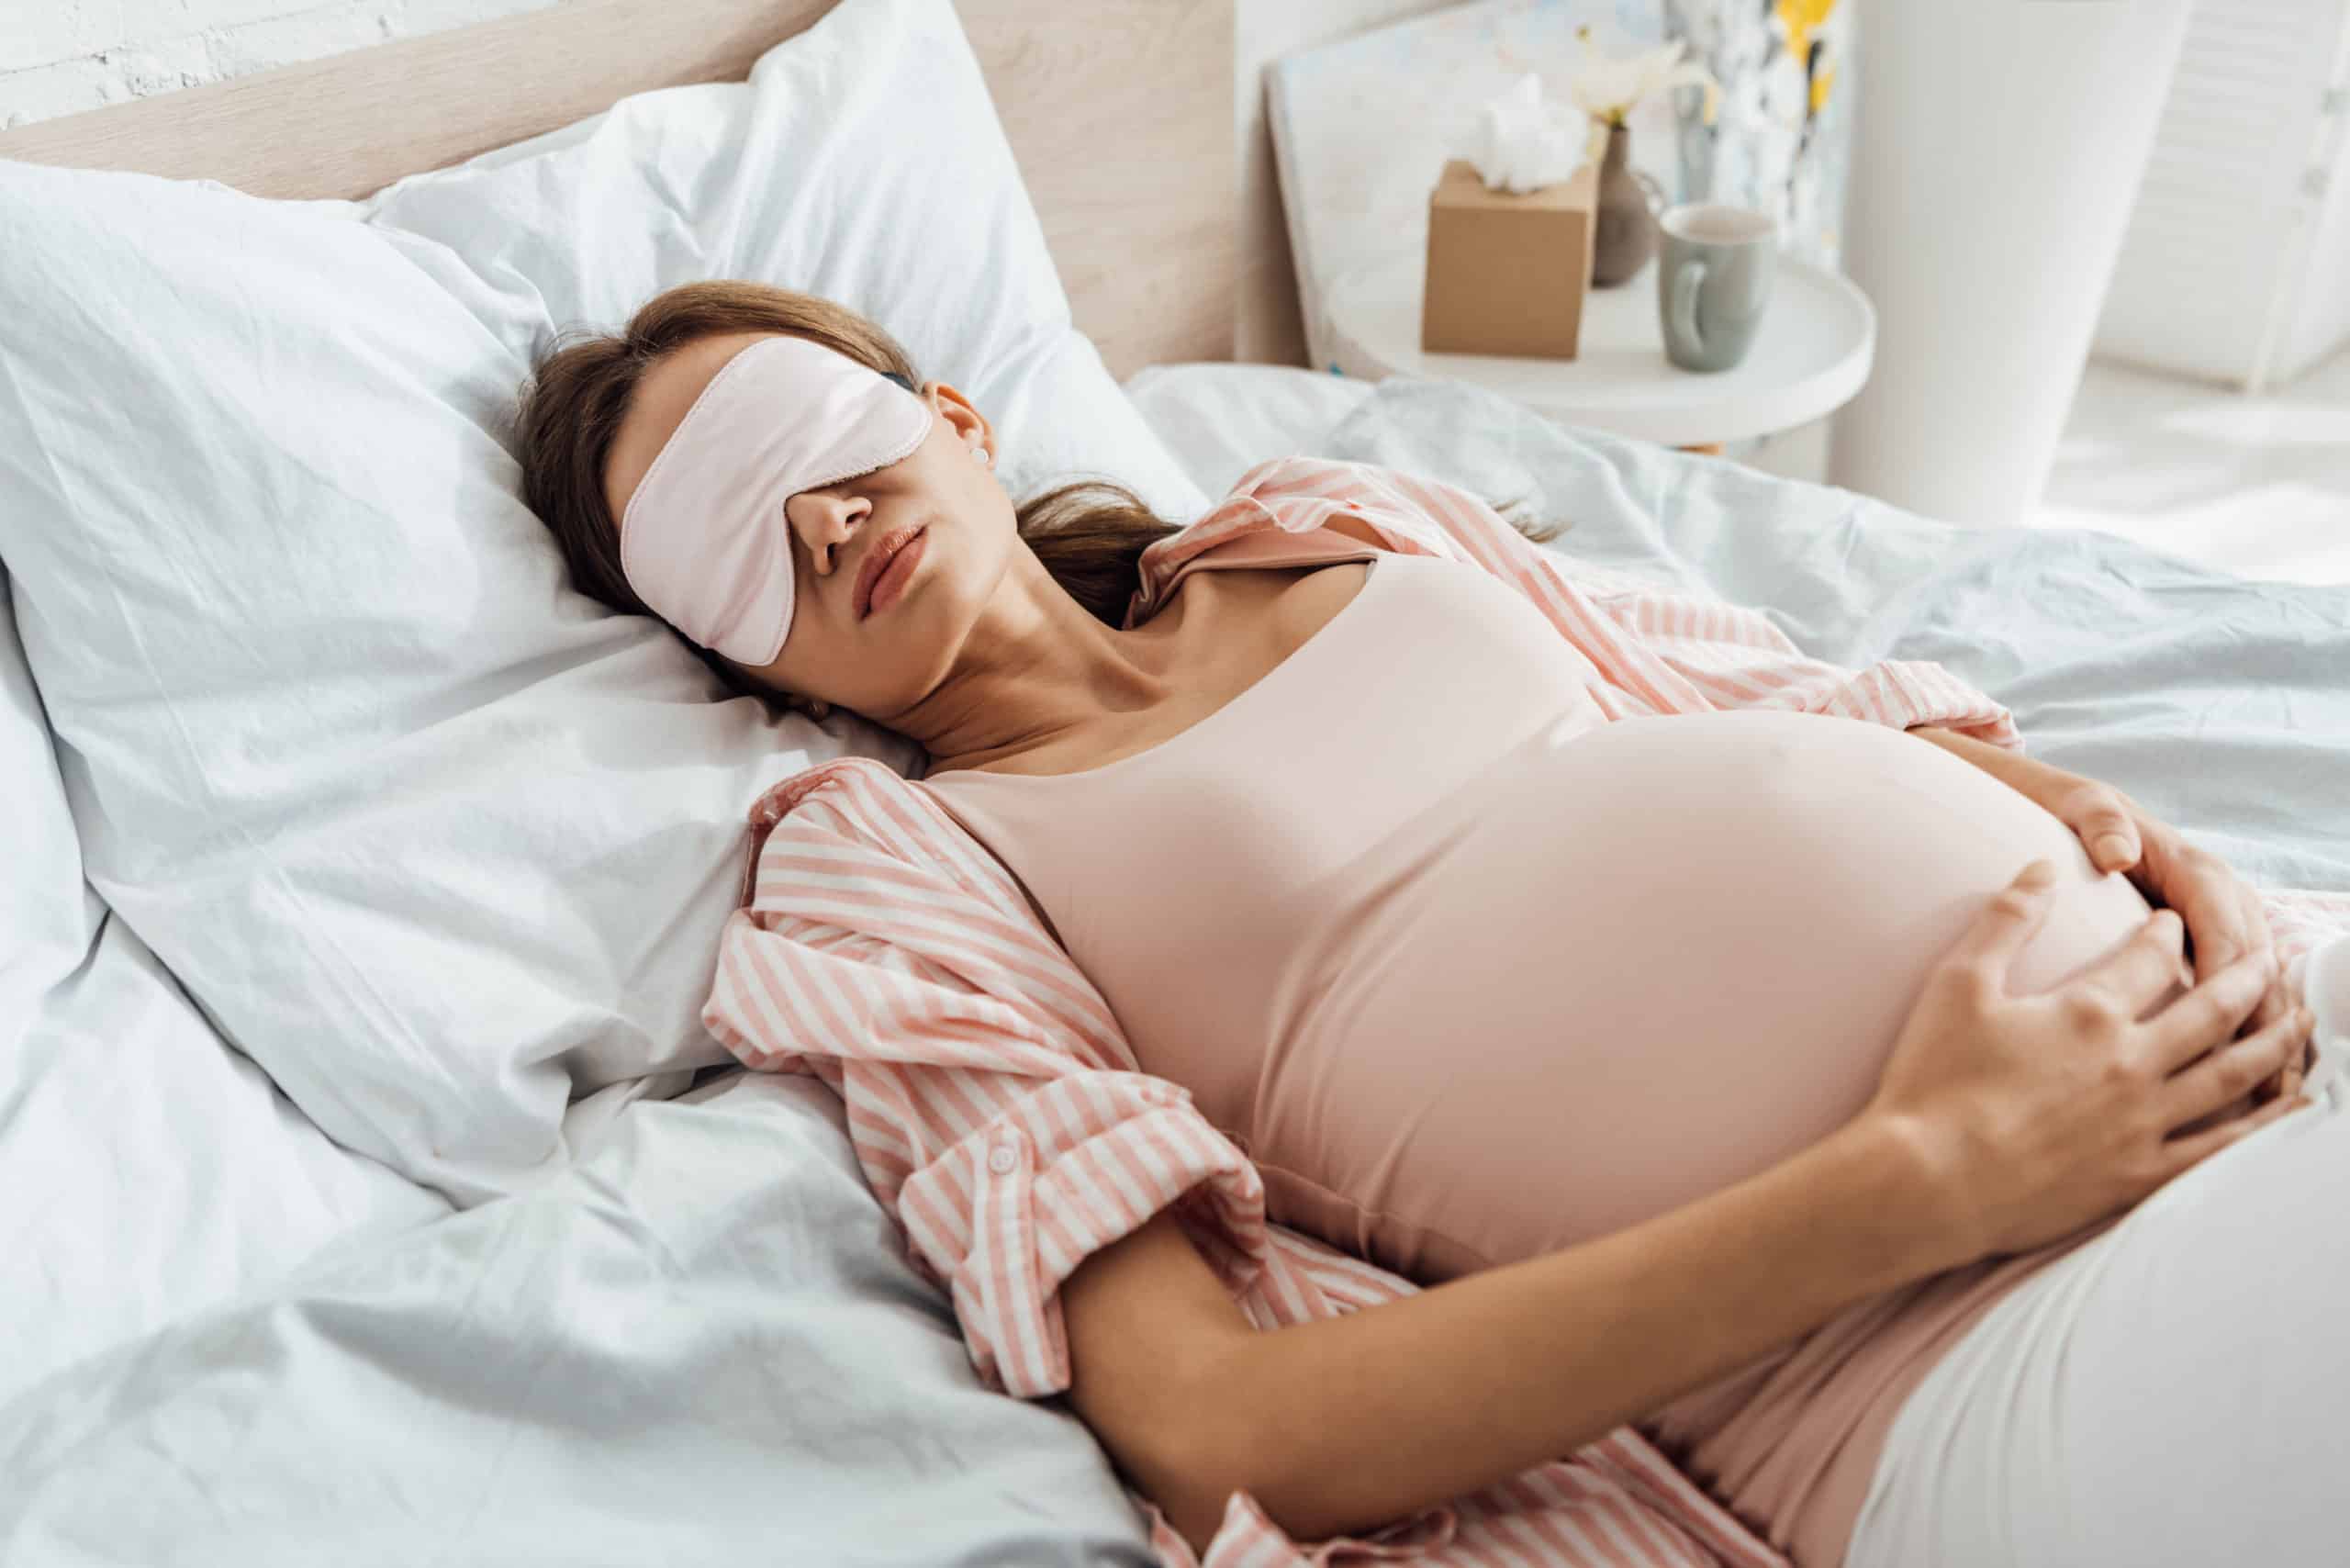 sleeping pregnant woman with a sleep mask on